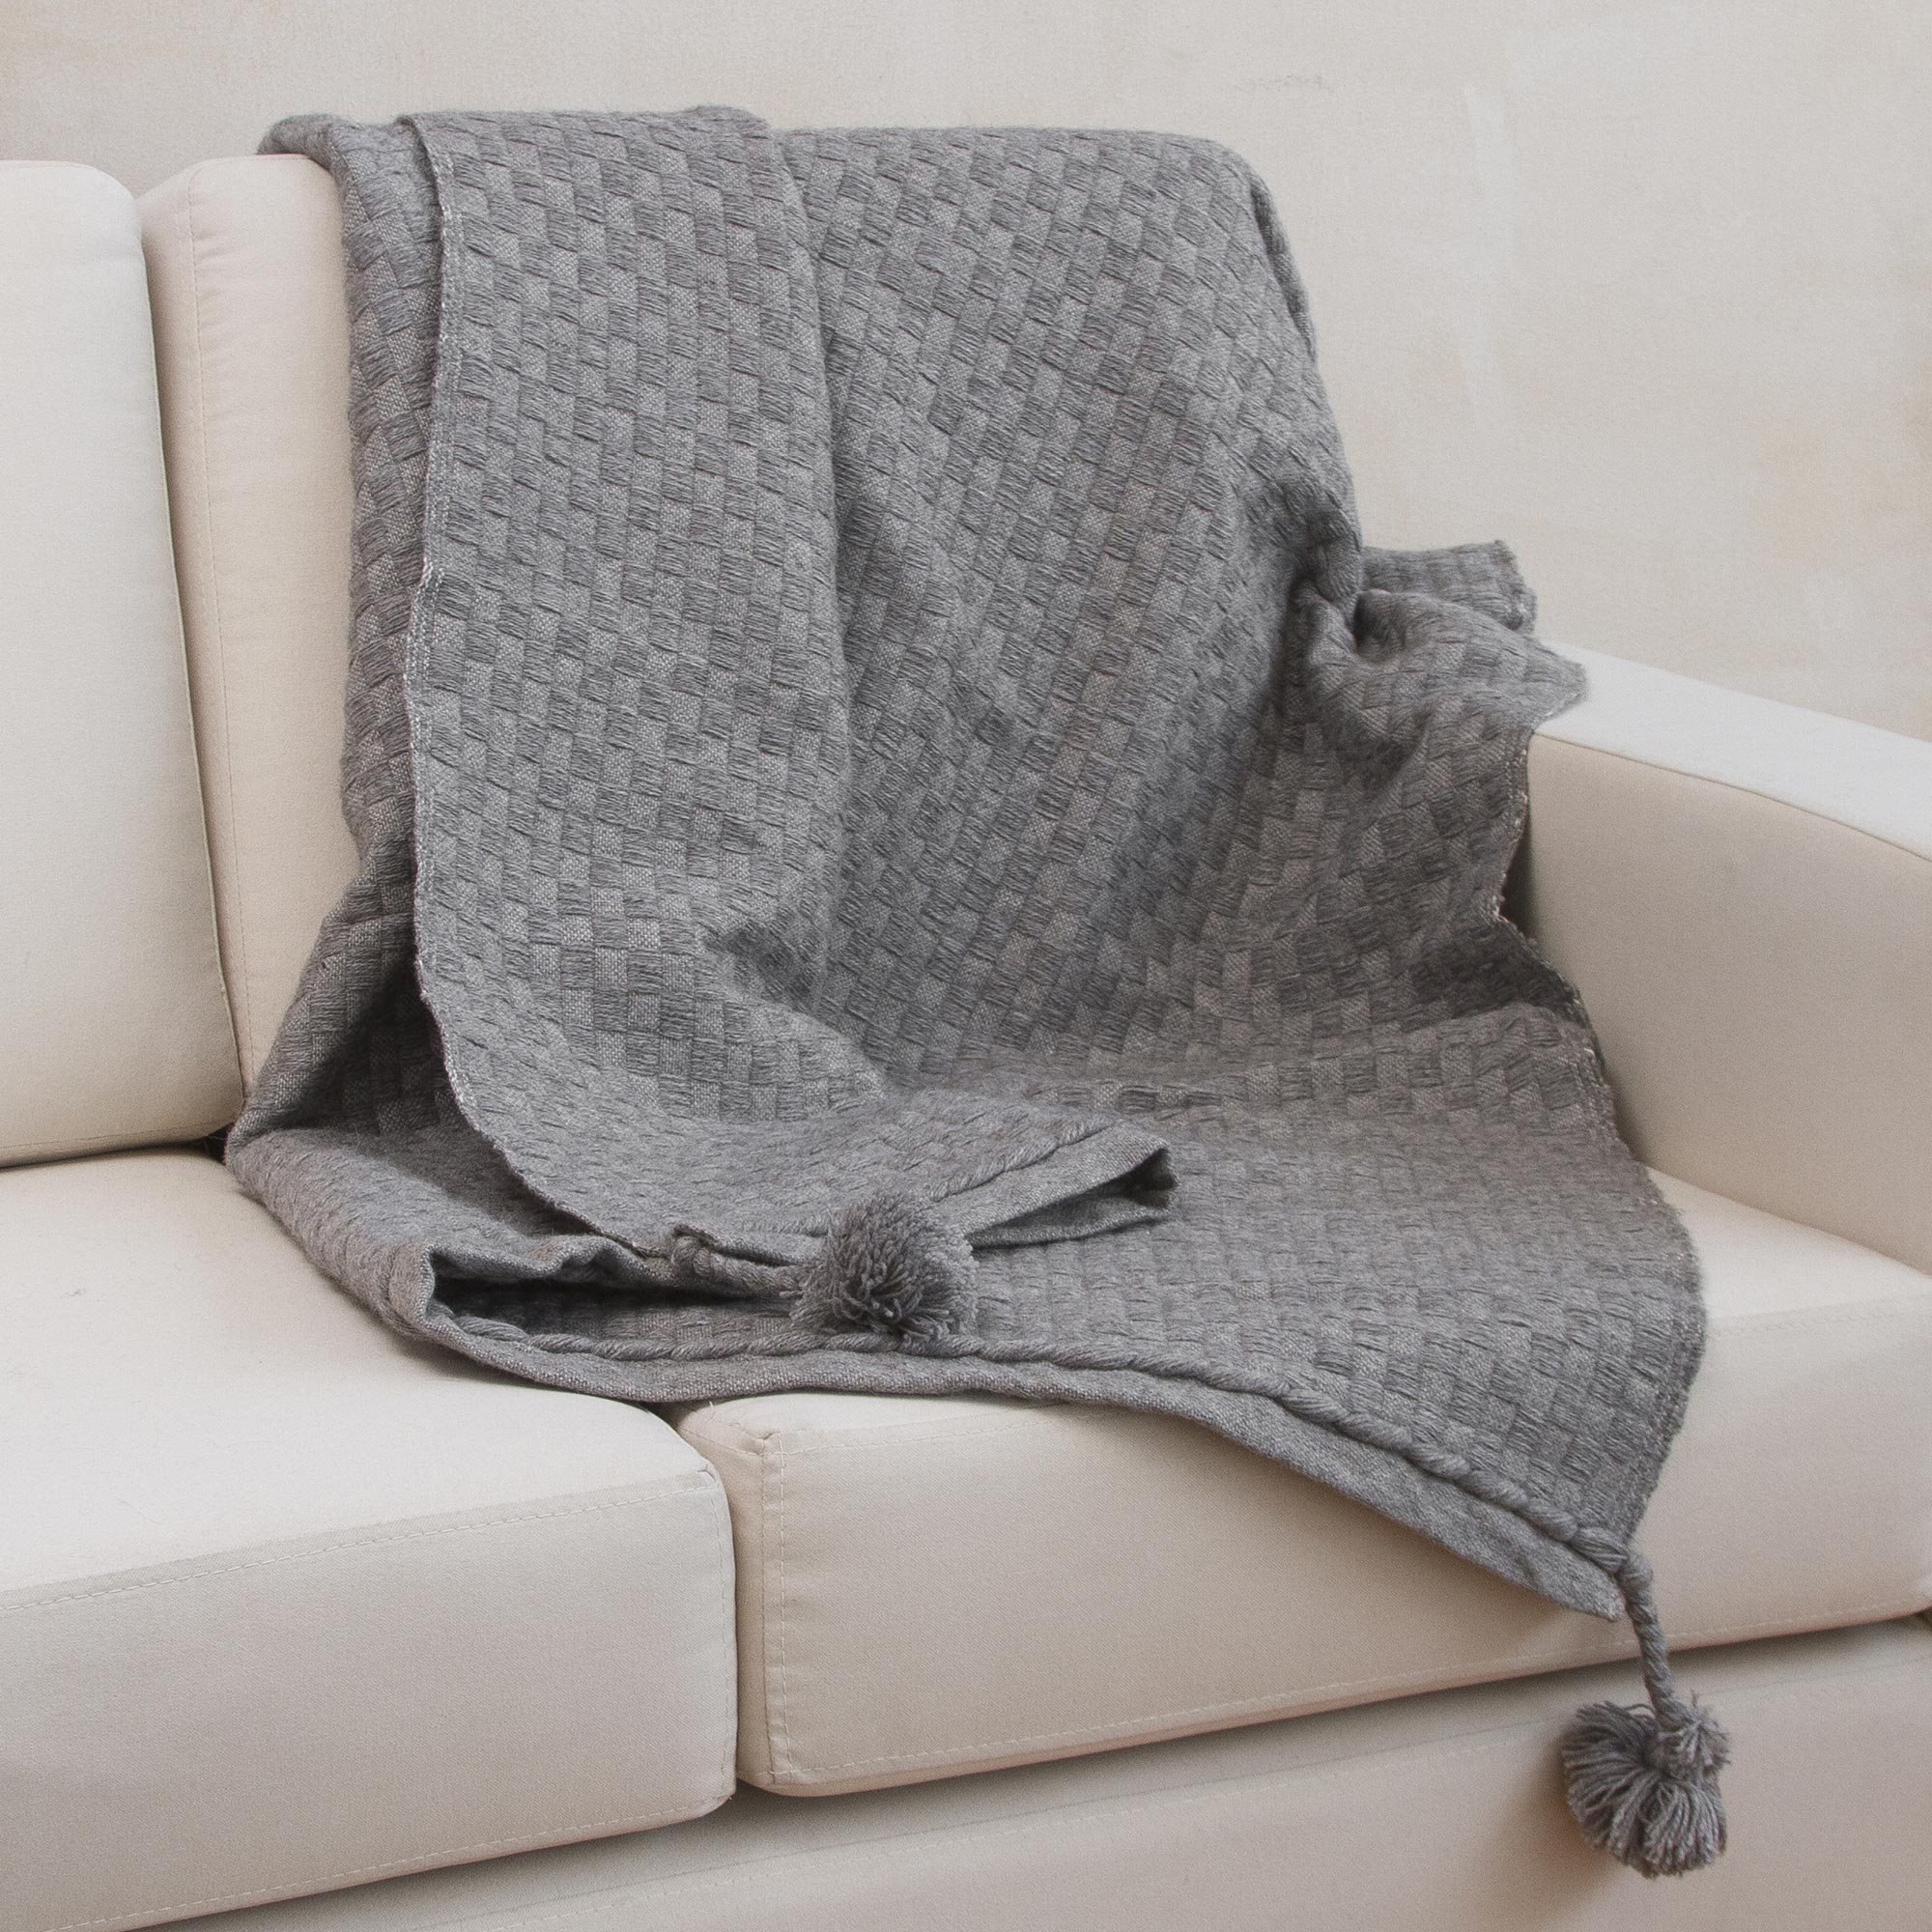 Neutral Grey Soft Alpaca Blend Throw Blanket with Tassels - Neutral Grey  Checks